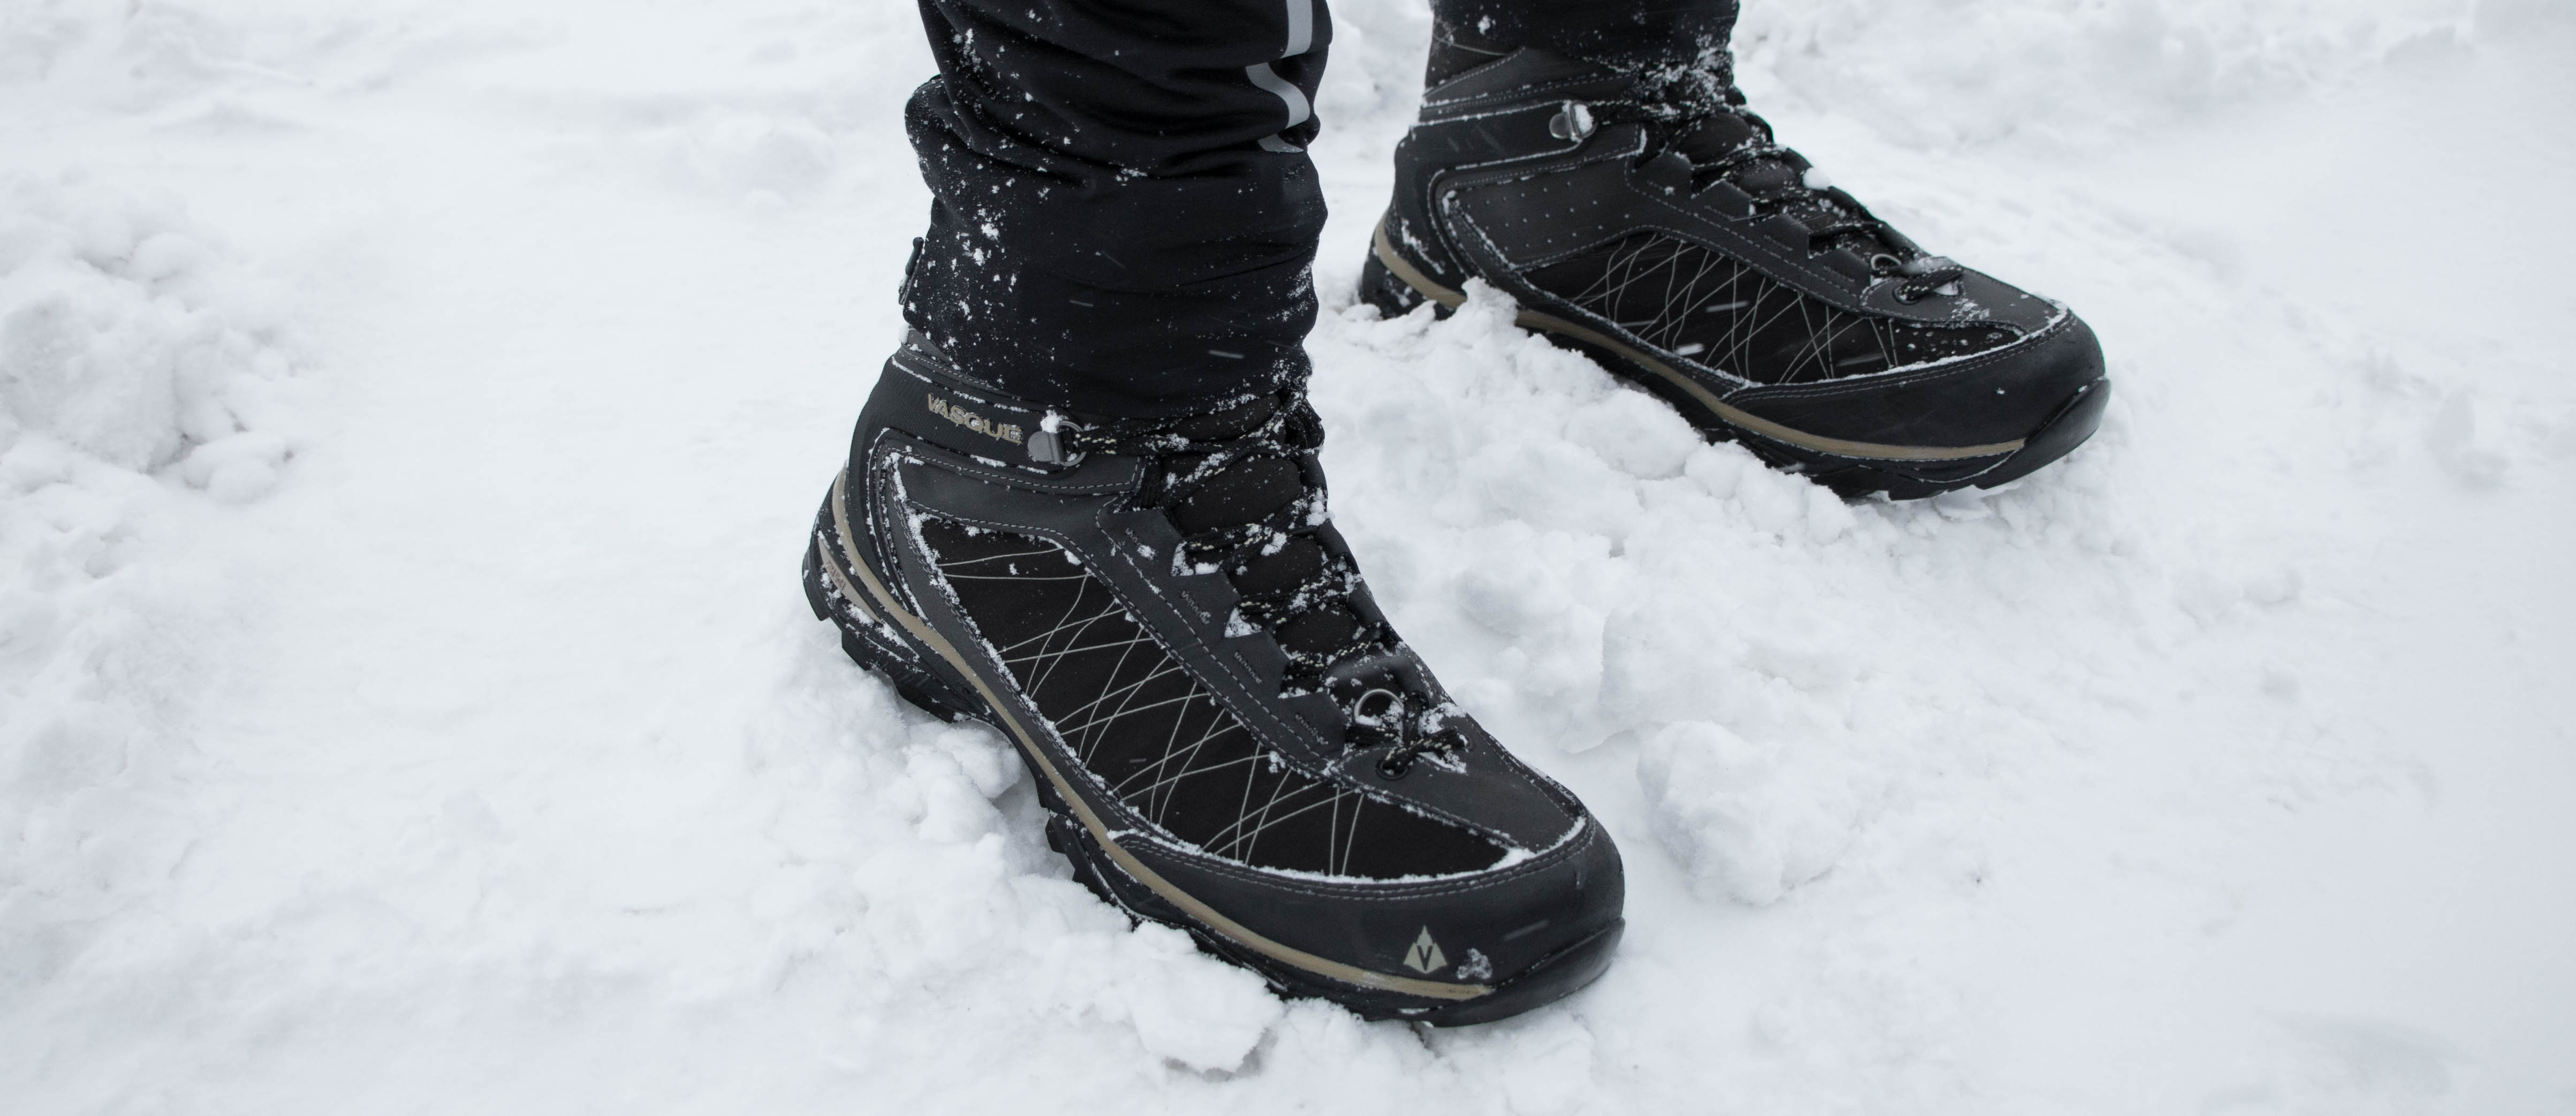 vasque women's coldspark ultradry snow boot